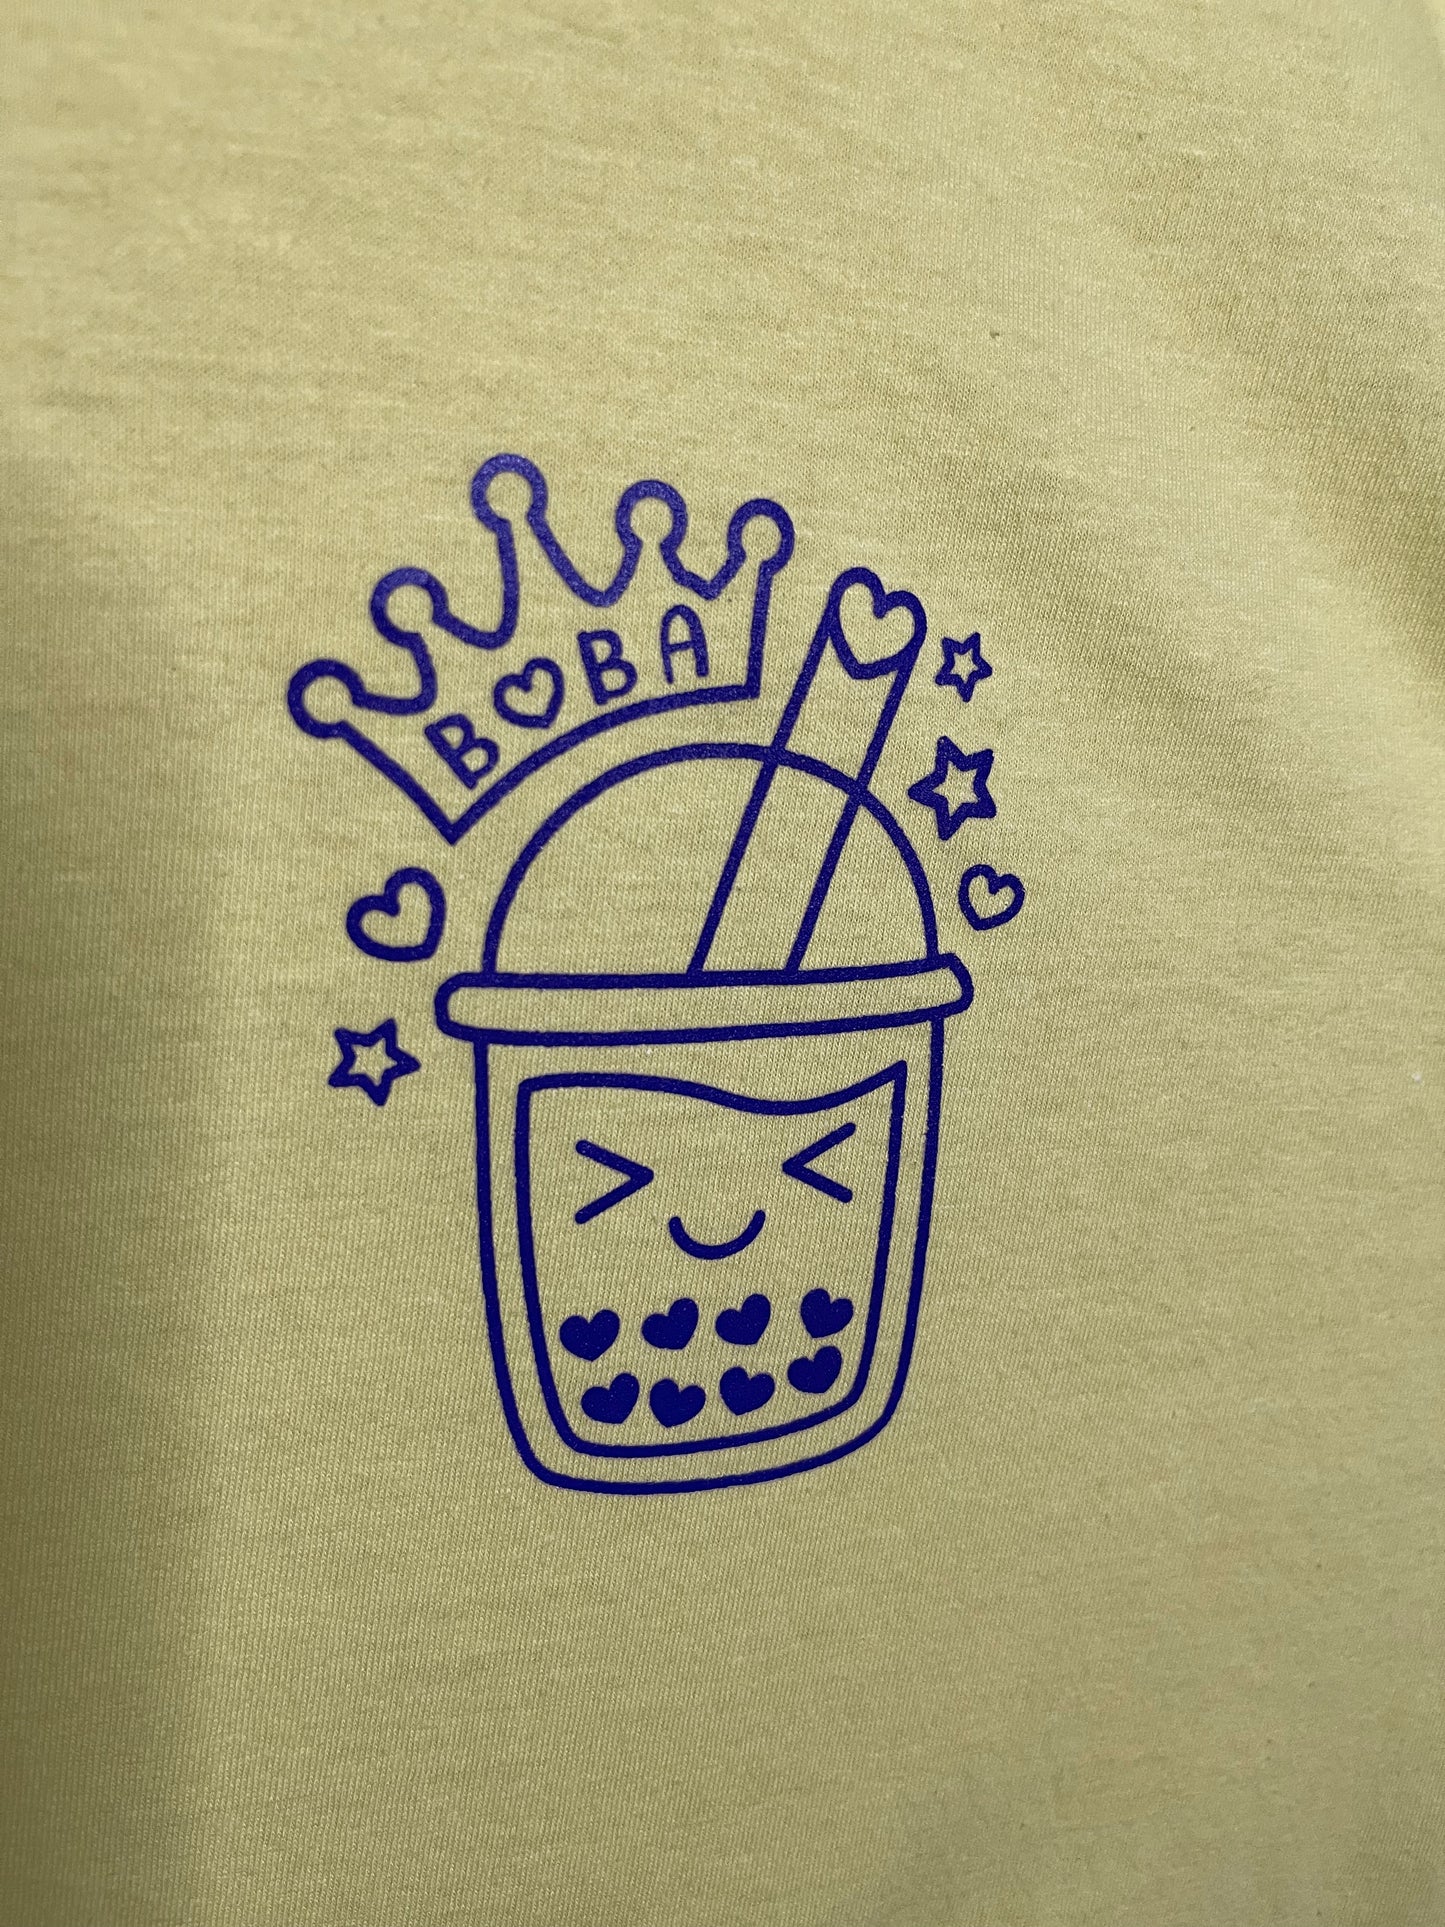 BOBA 👑 KING / QUEEN - T-Shirt - OG Design